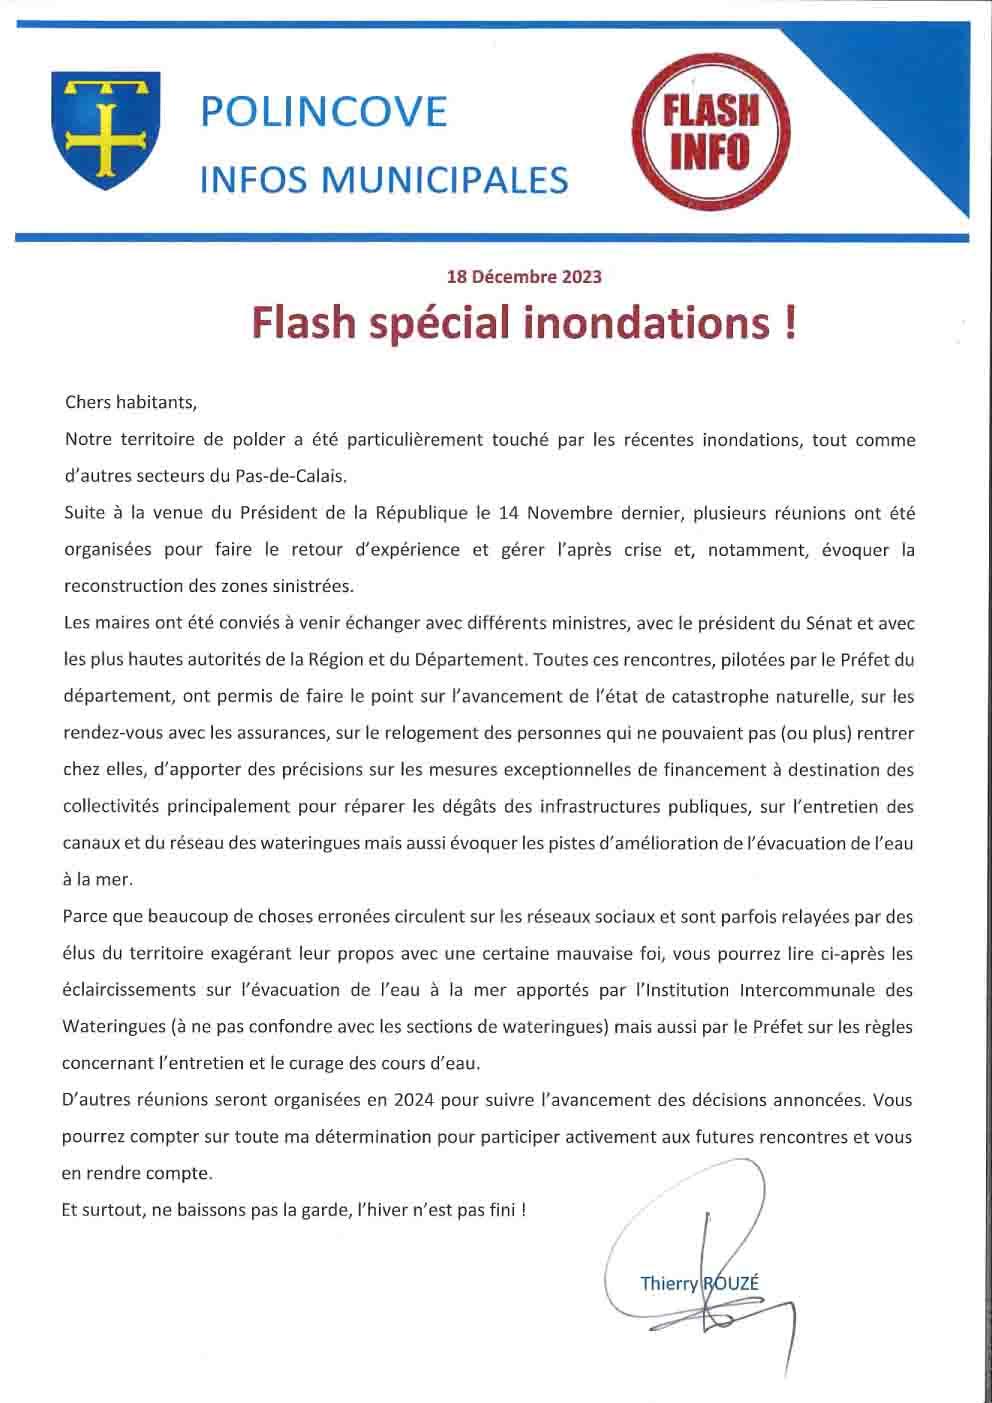 Flash info inondations 1